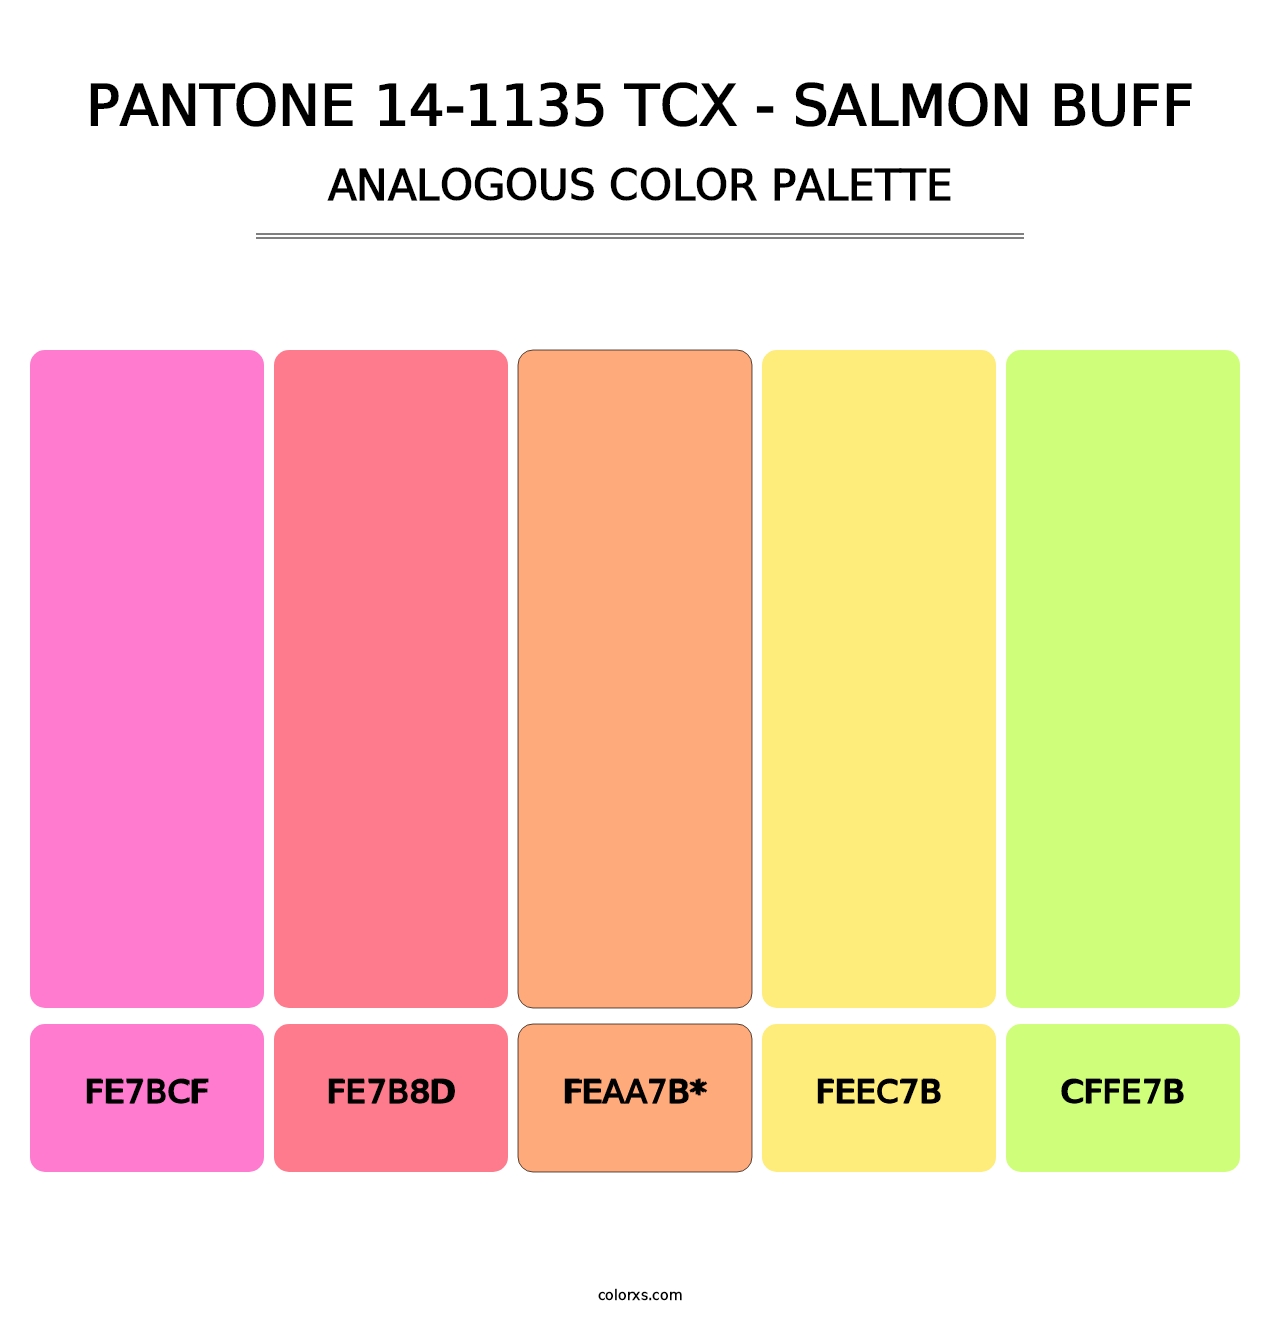 PANTONE 14-1135 TCX - Salmon Buff - Analogous Color Palette